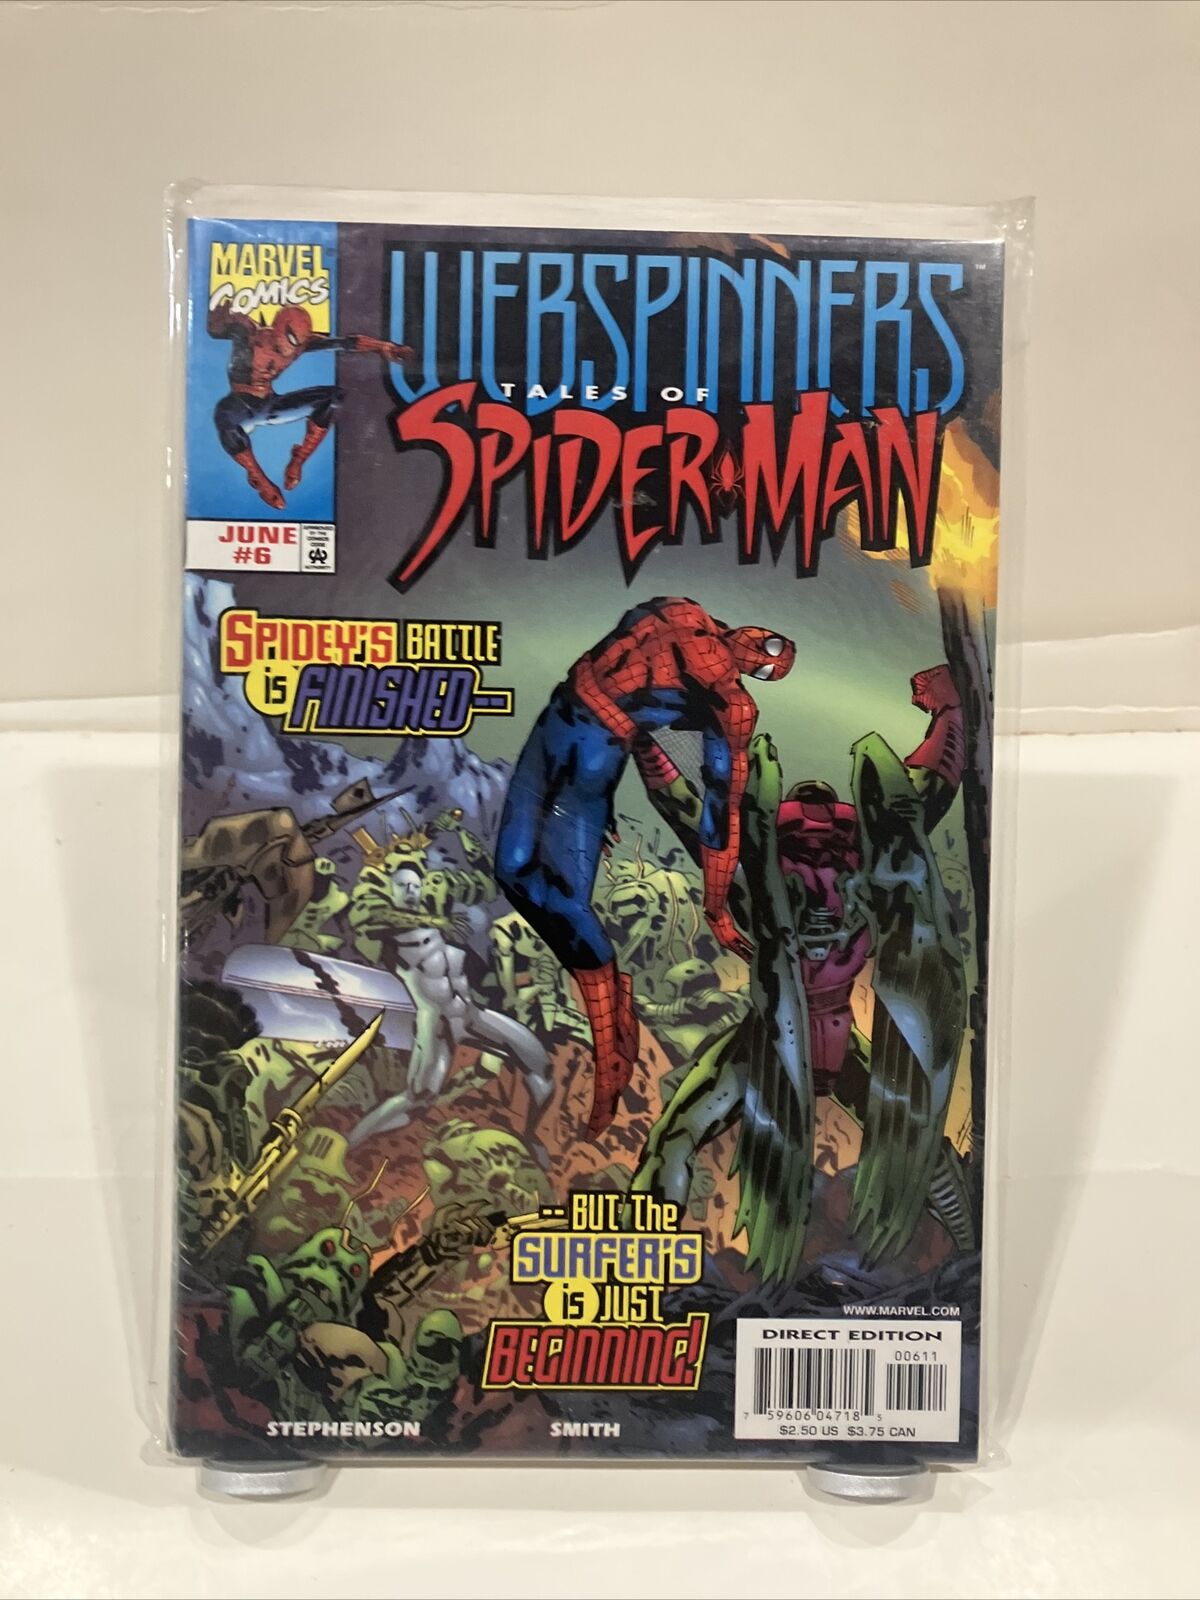 Webspinners Tales of Spiderman #6 Marvel 1999